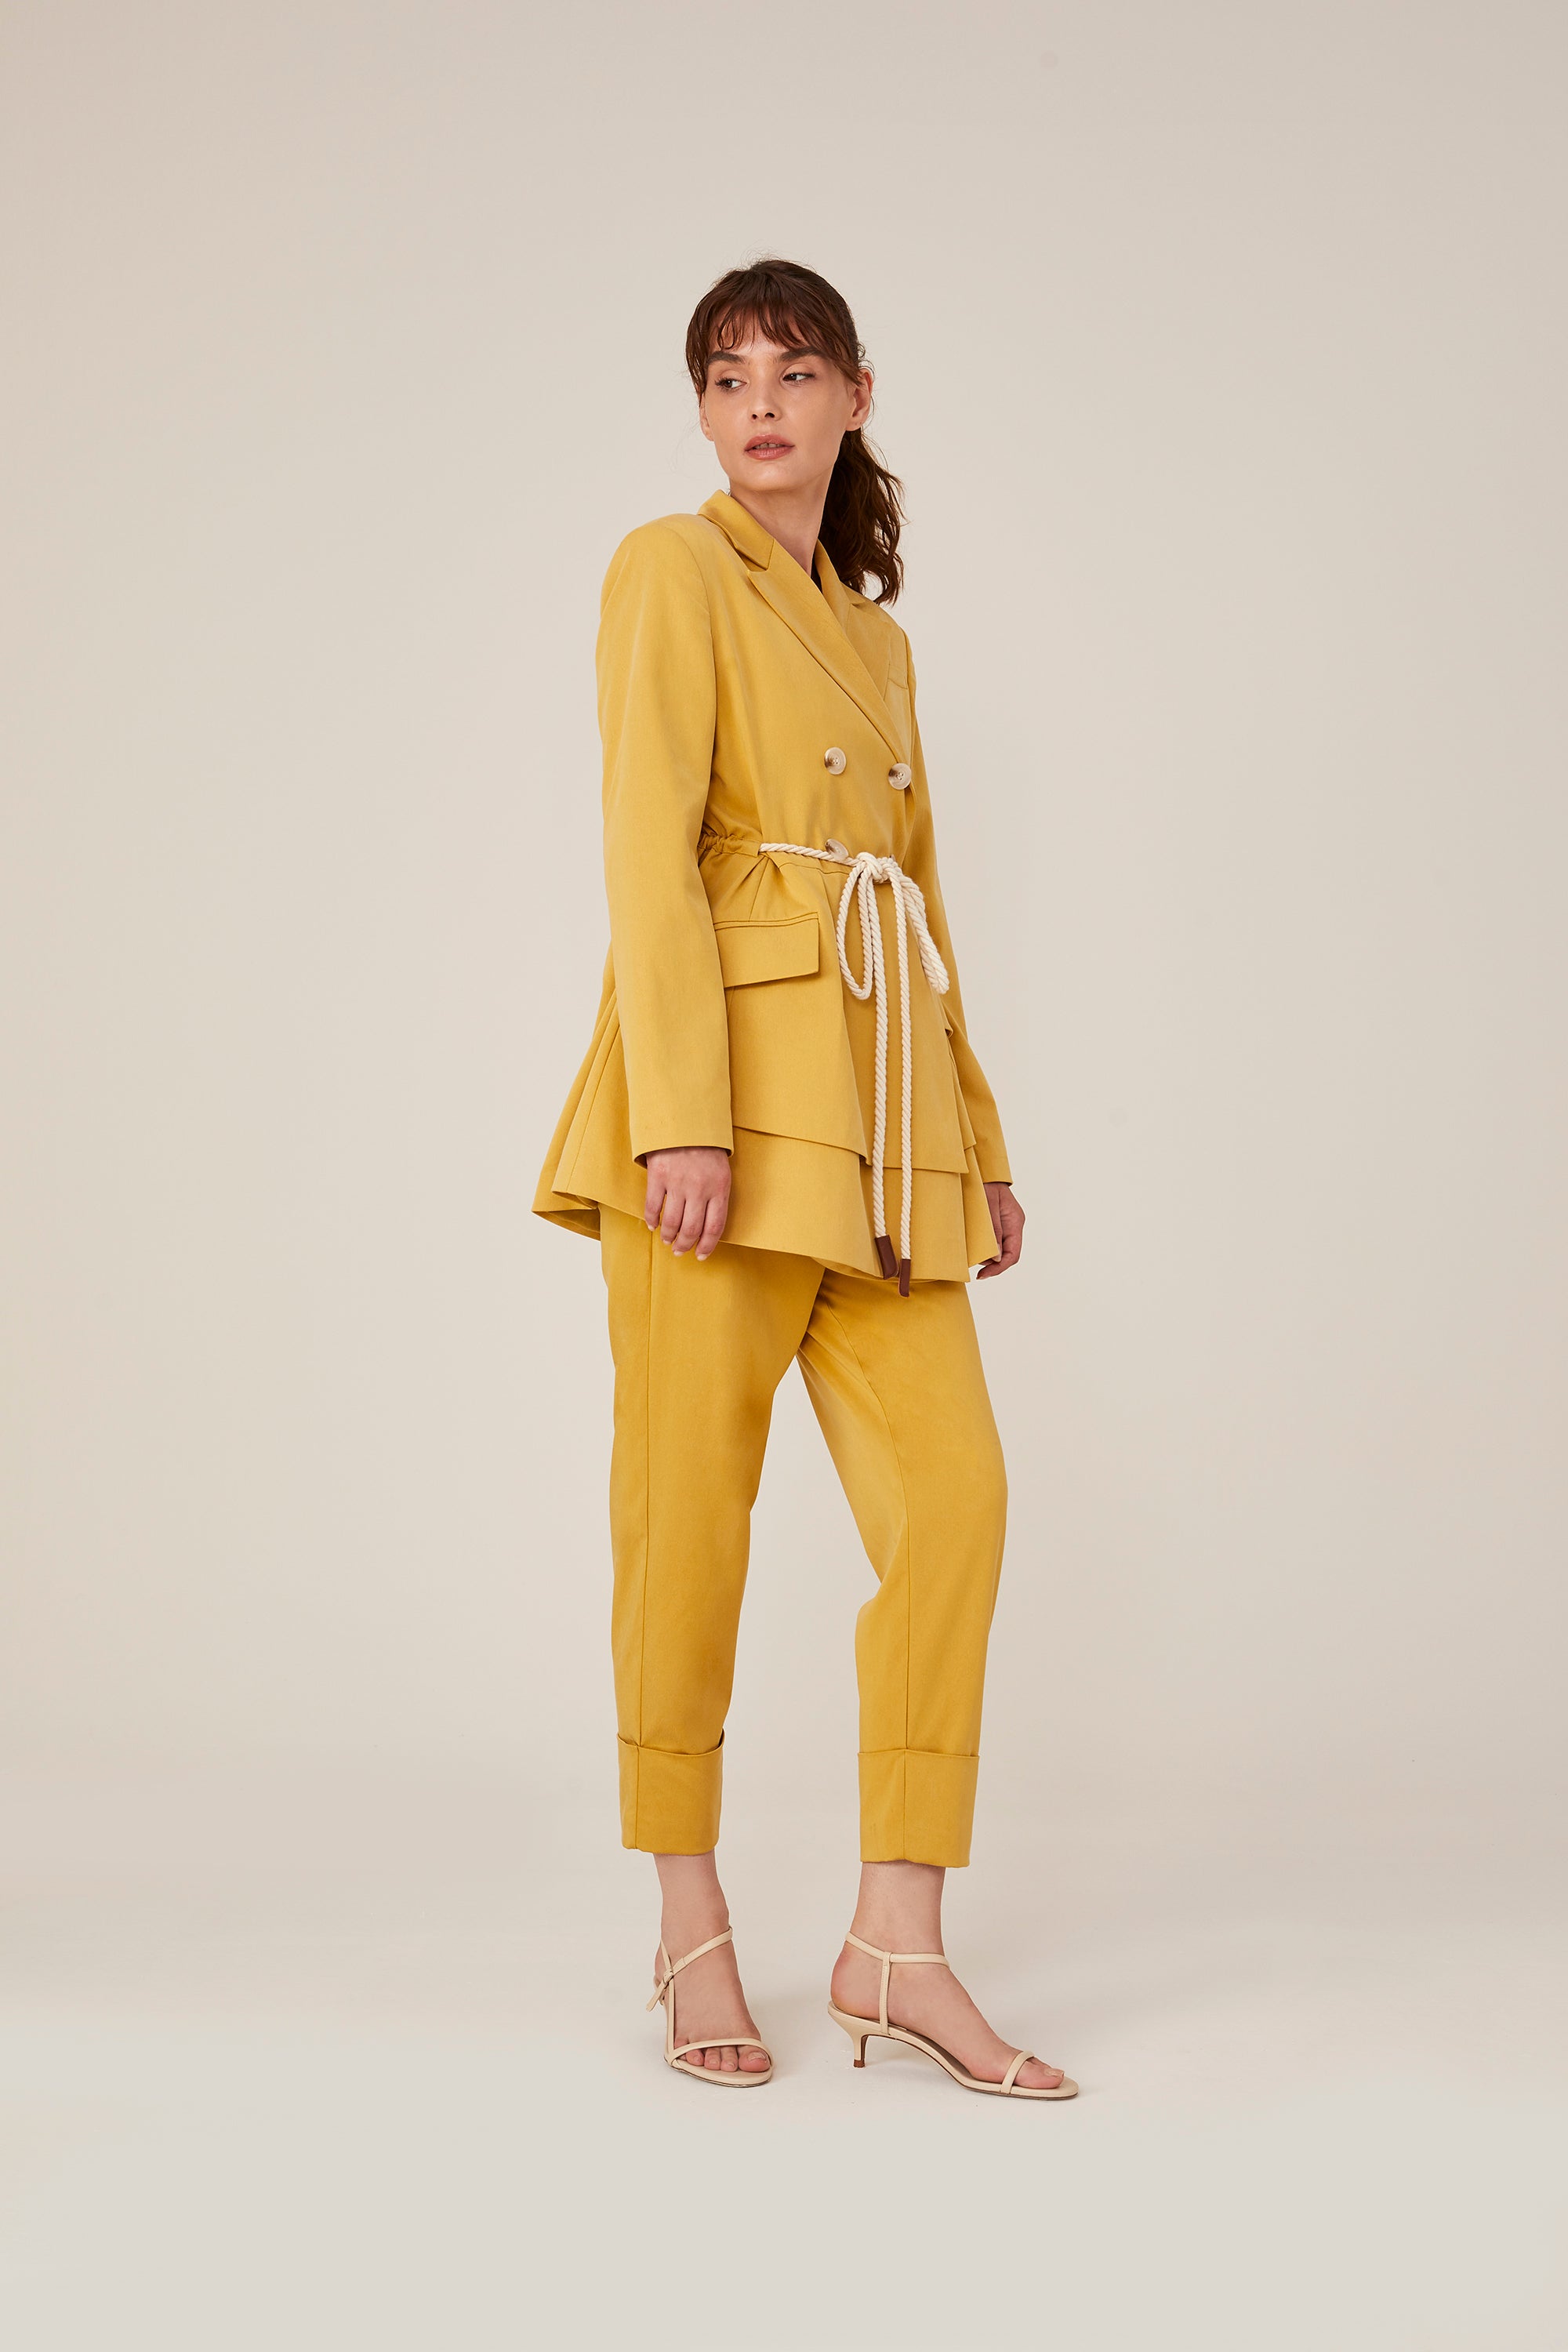 Berner Suit-Yellow 100% organic cotton 🌿